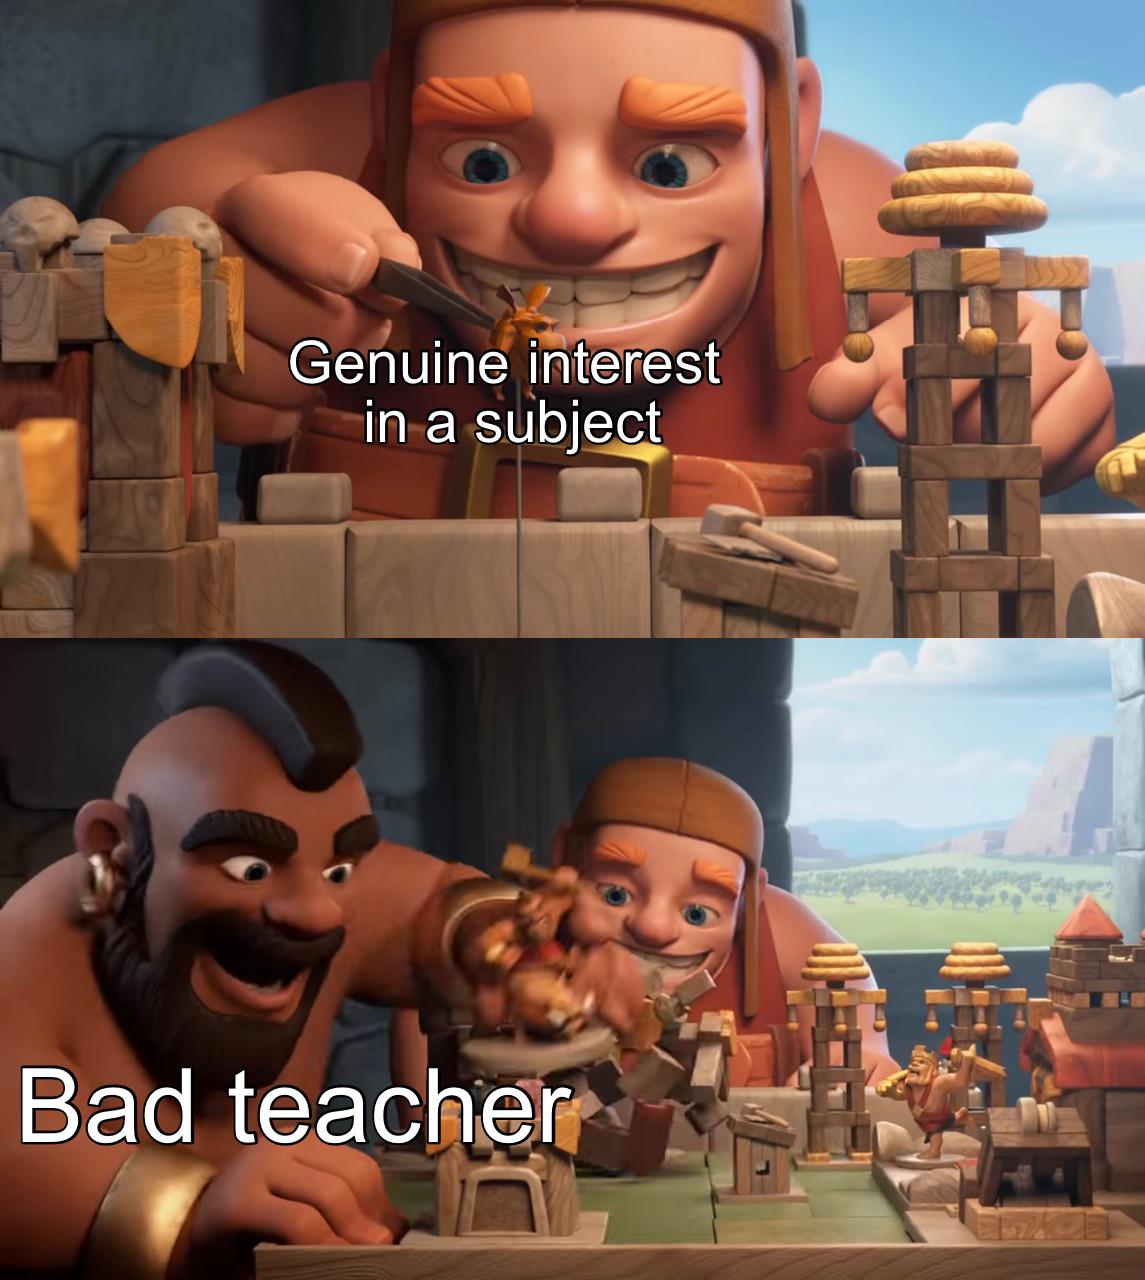 dank memes - funny memes - cartoon - Genuine interest in a subject 19 Bad teacher